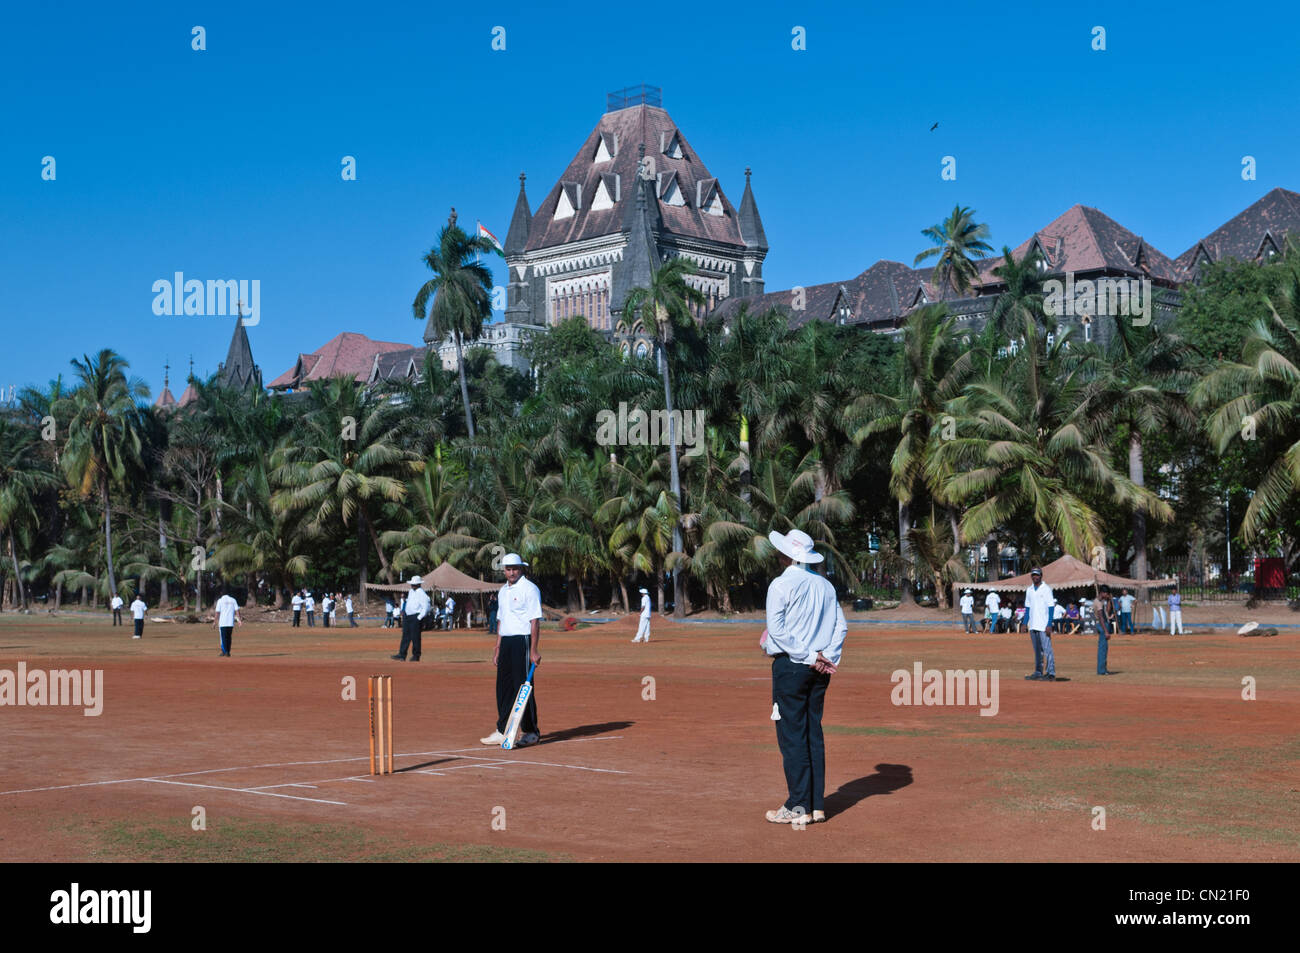 Playing cricket Oval Maidan High Court building Mumbai Bombay India Stock Photo